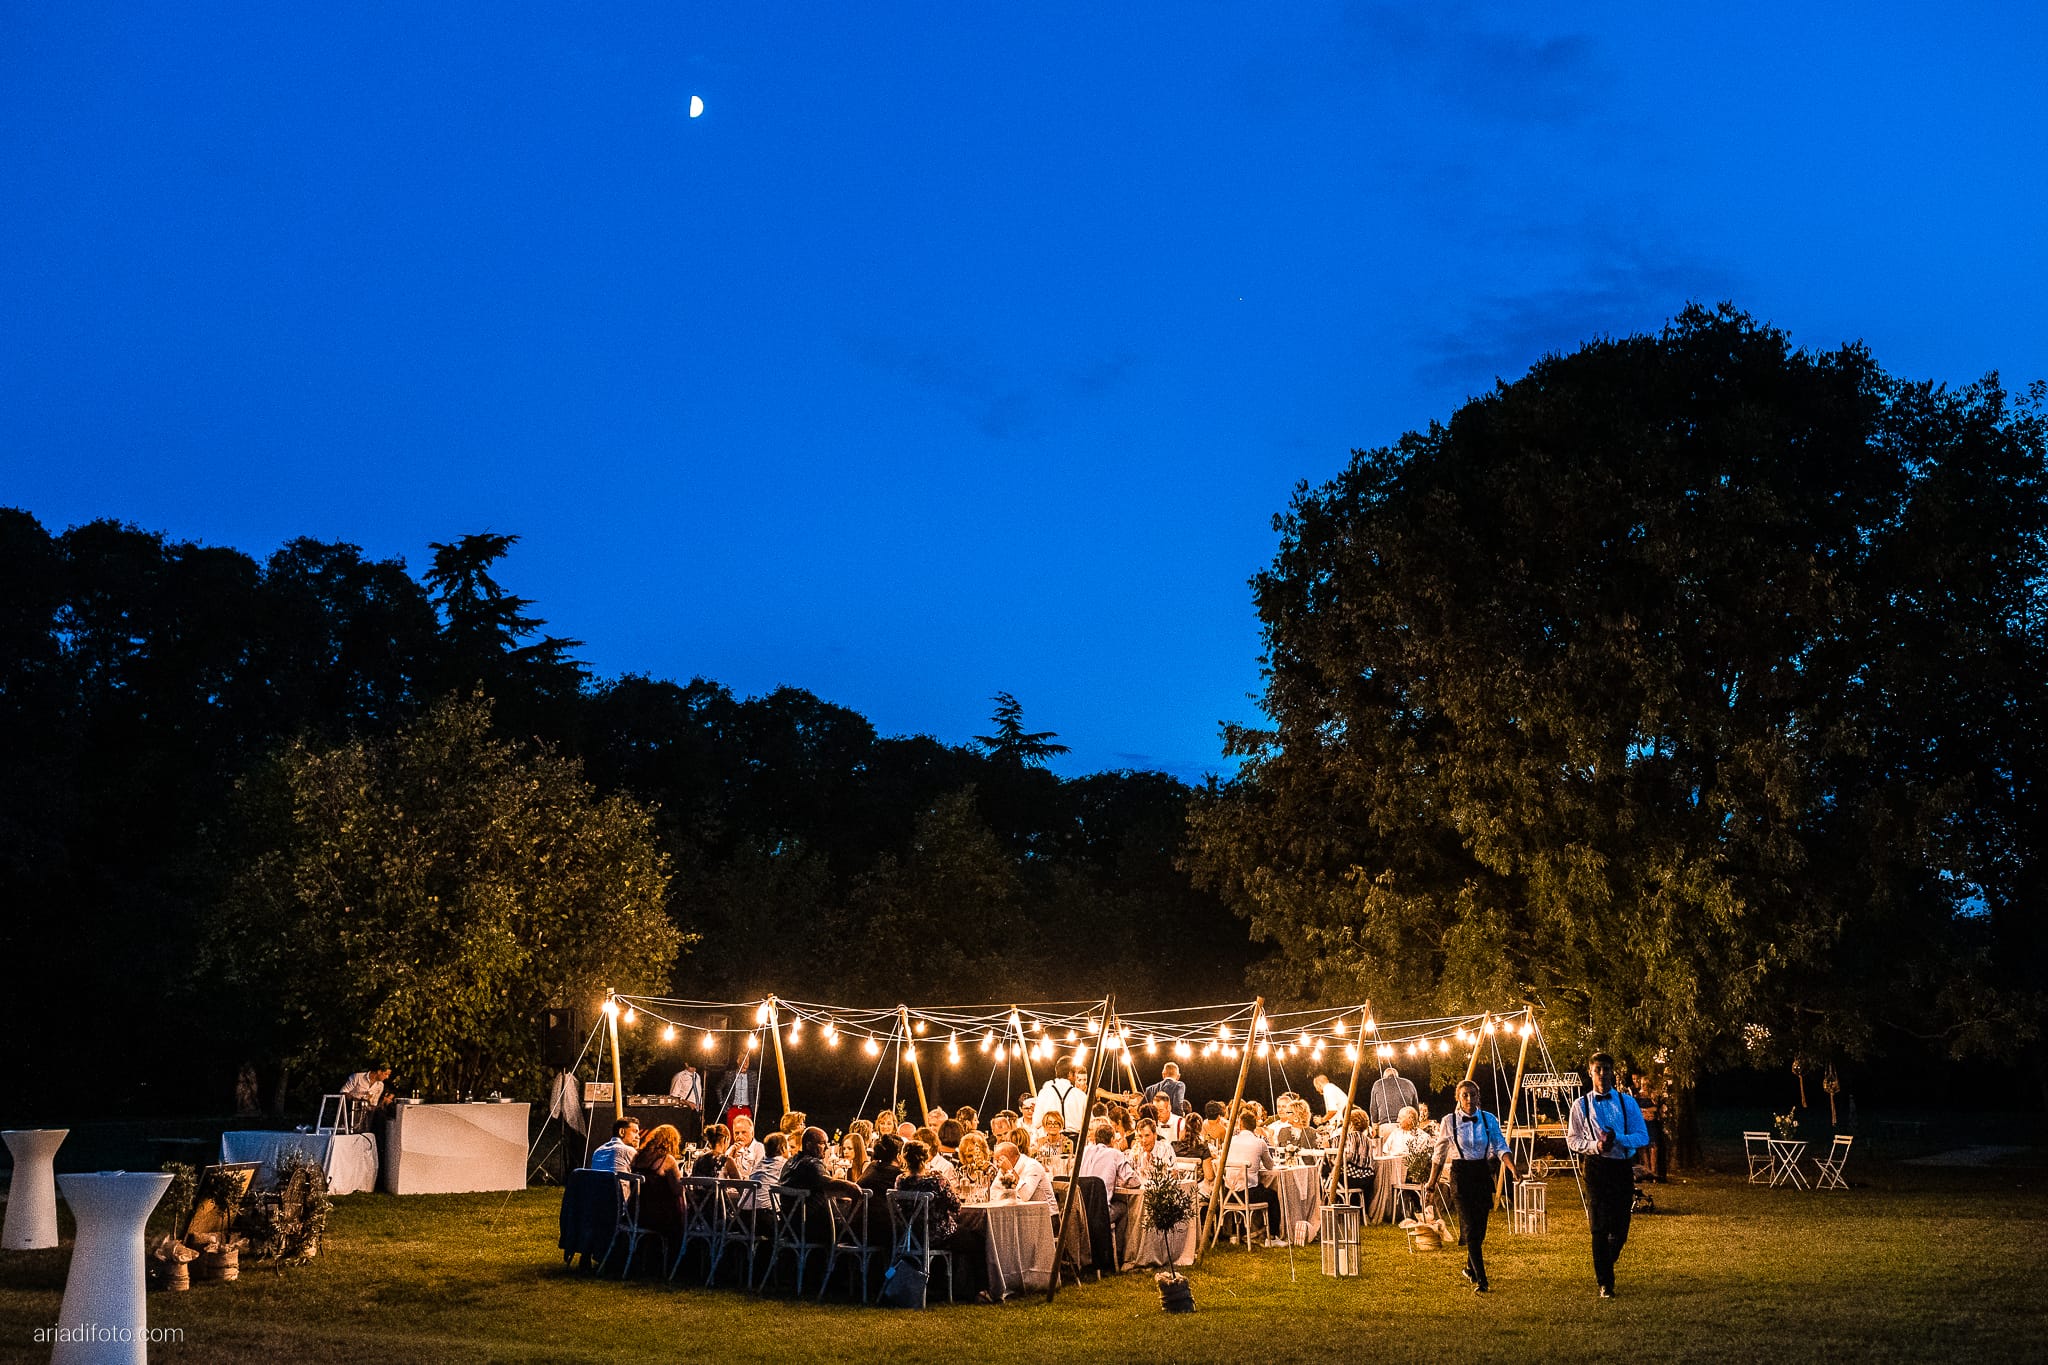 Stefania Raffaele Matrimonio Country Chic Outdoor Gorizia ricevimento cena all'aperto in giardino luci catenarie